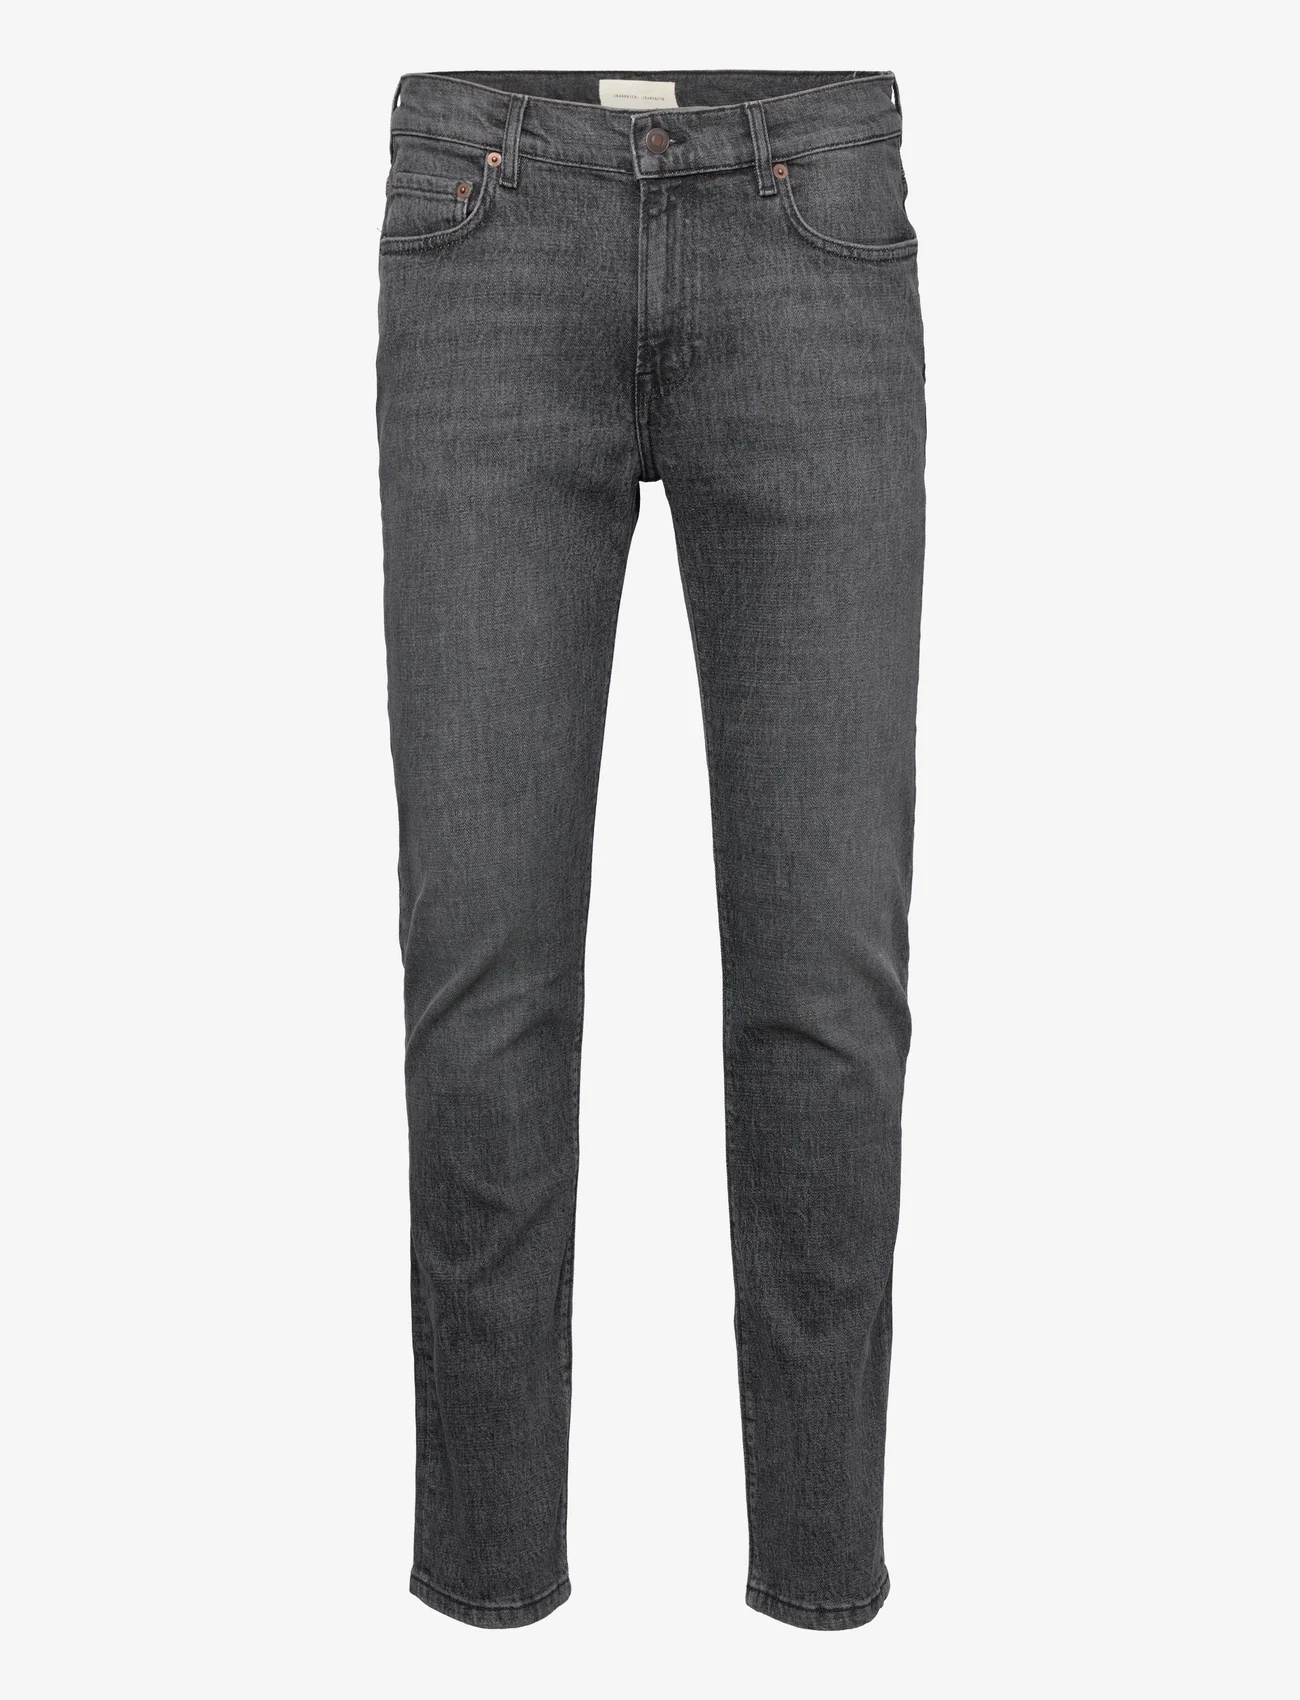 Jeanerica - SM001 Slim Jeans - chemises basiques - blackvintage82 - 1